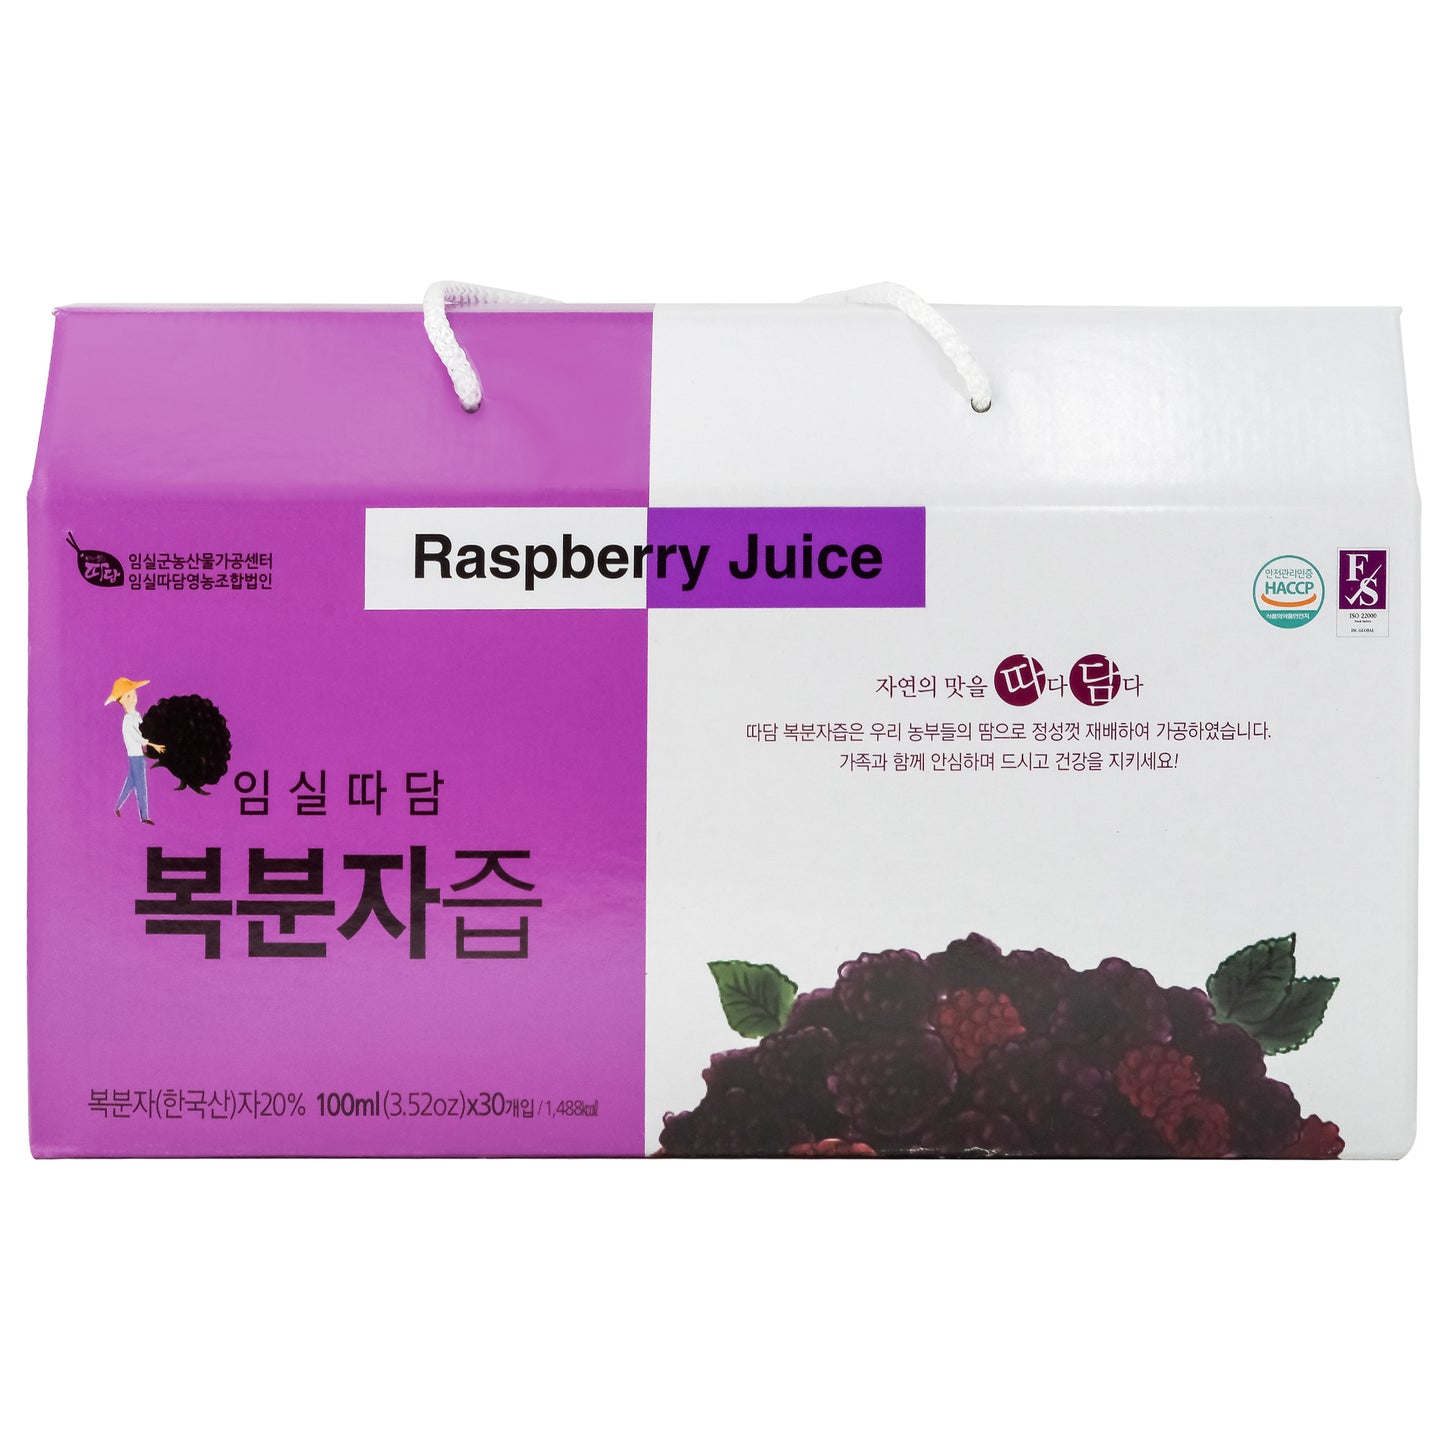 Ttadam Raspberry Juice 100ml per Pack, 30 Pack per Box 복분자 즙, 복분자 쥬스